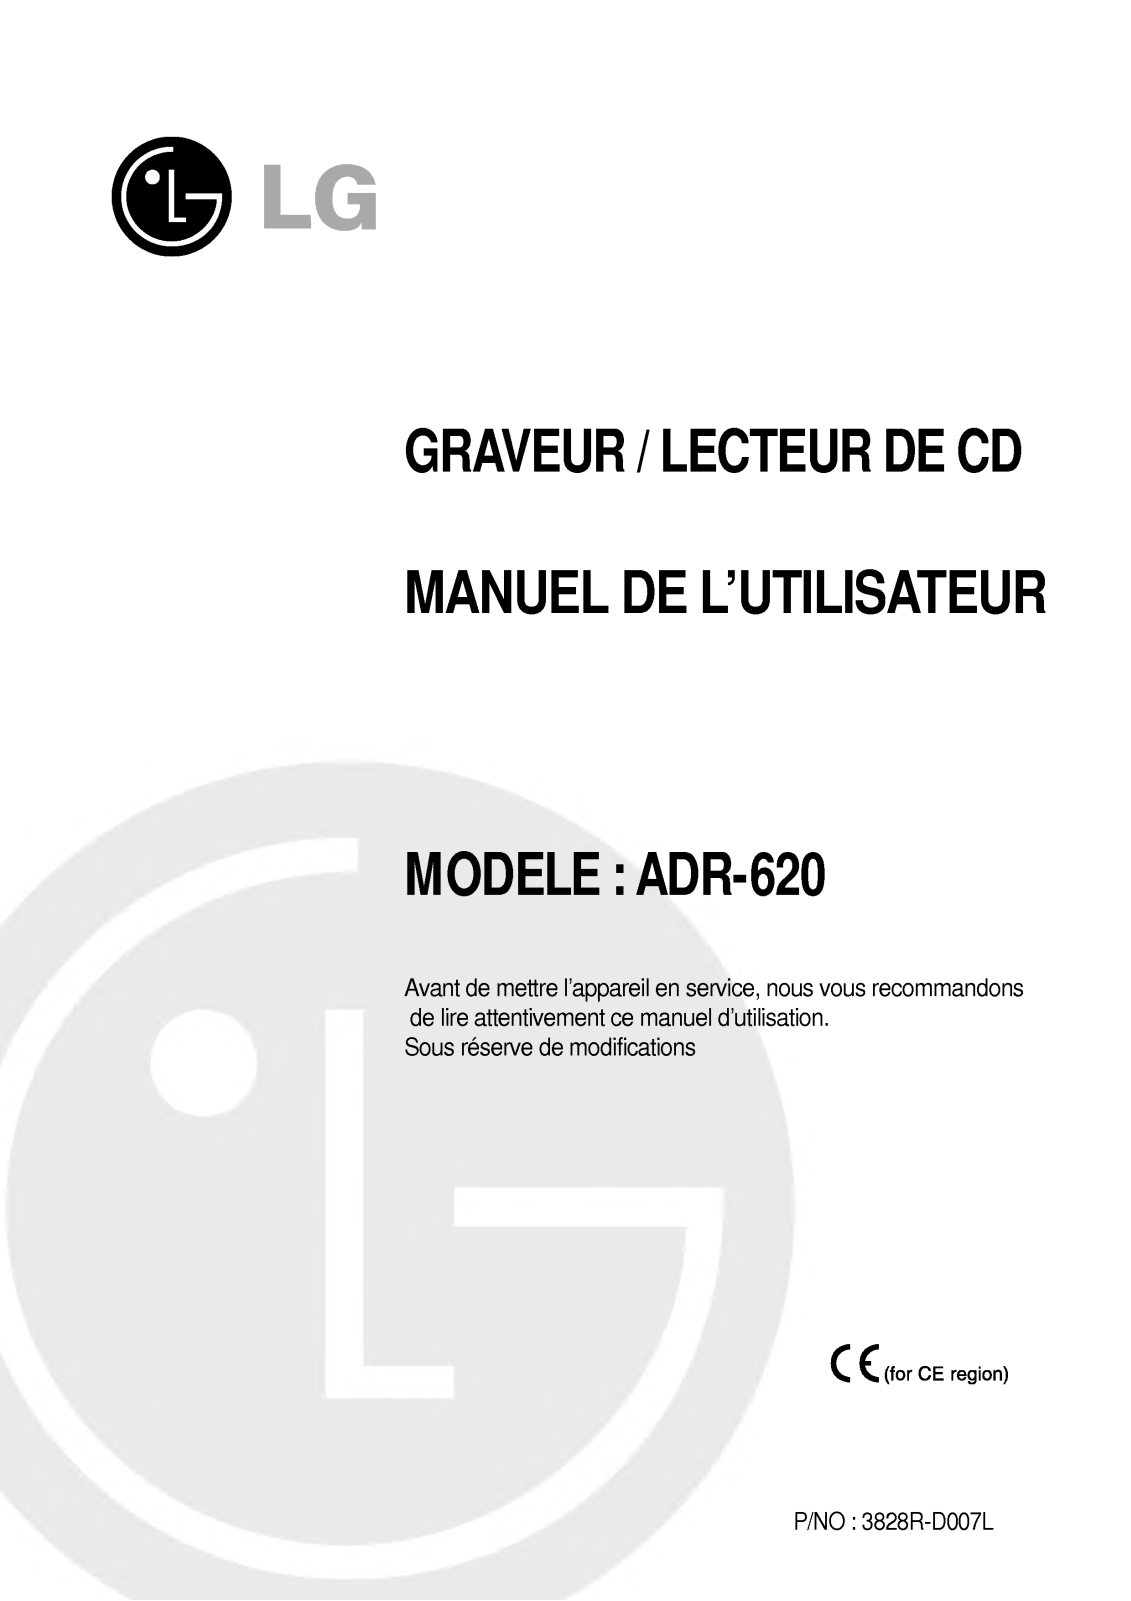 LG ADR-620 Manual